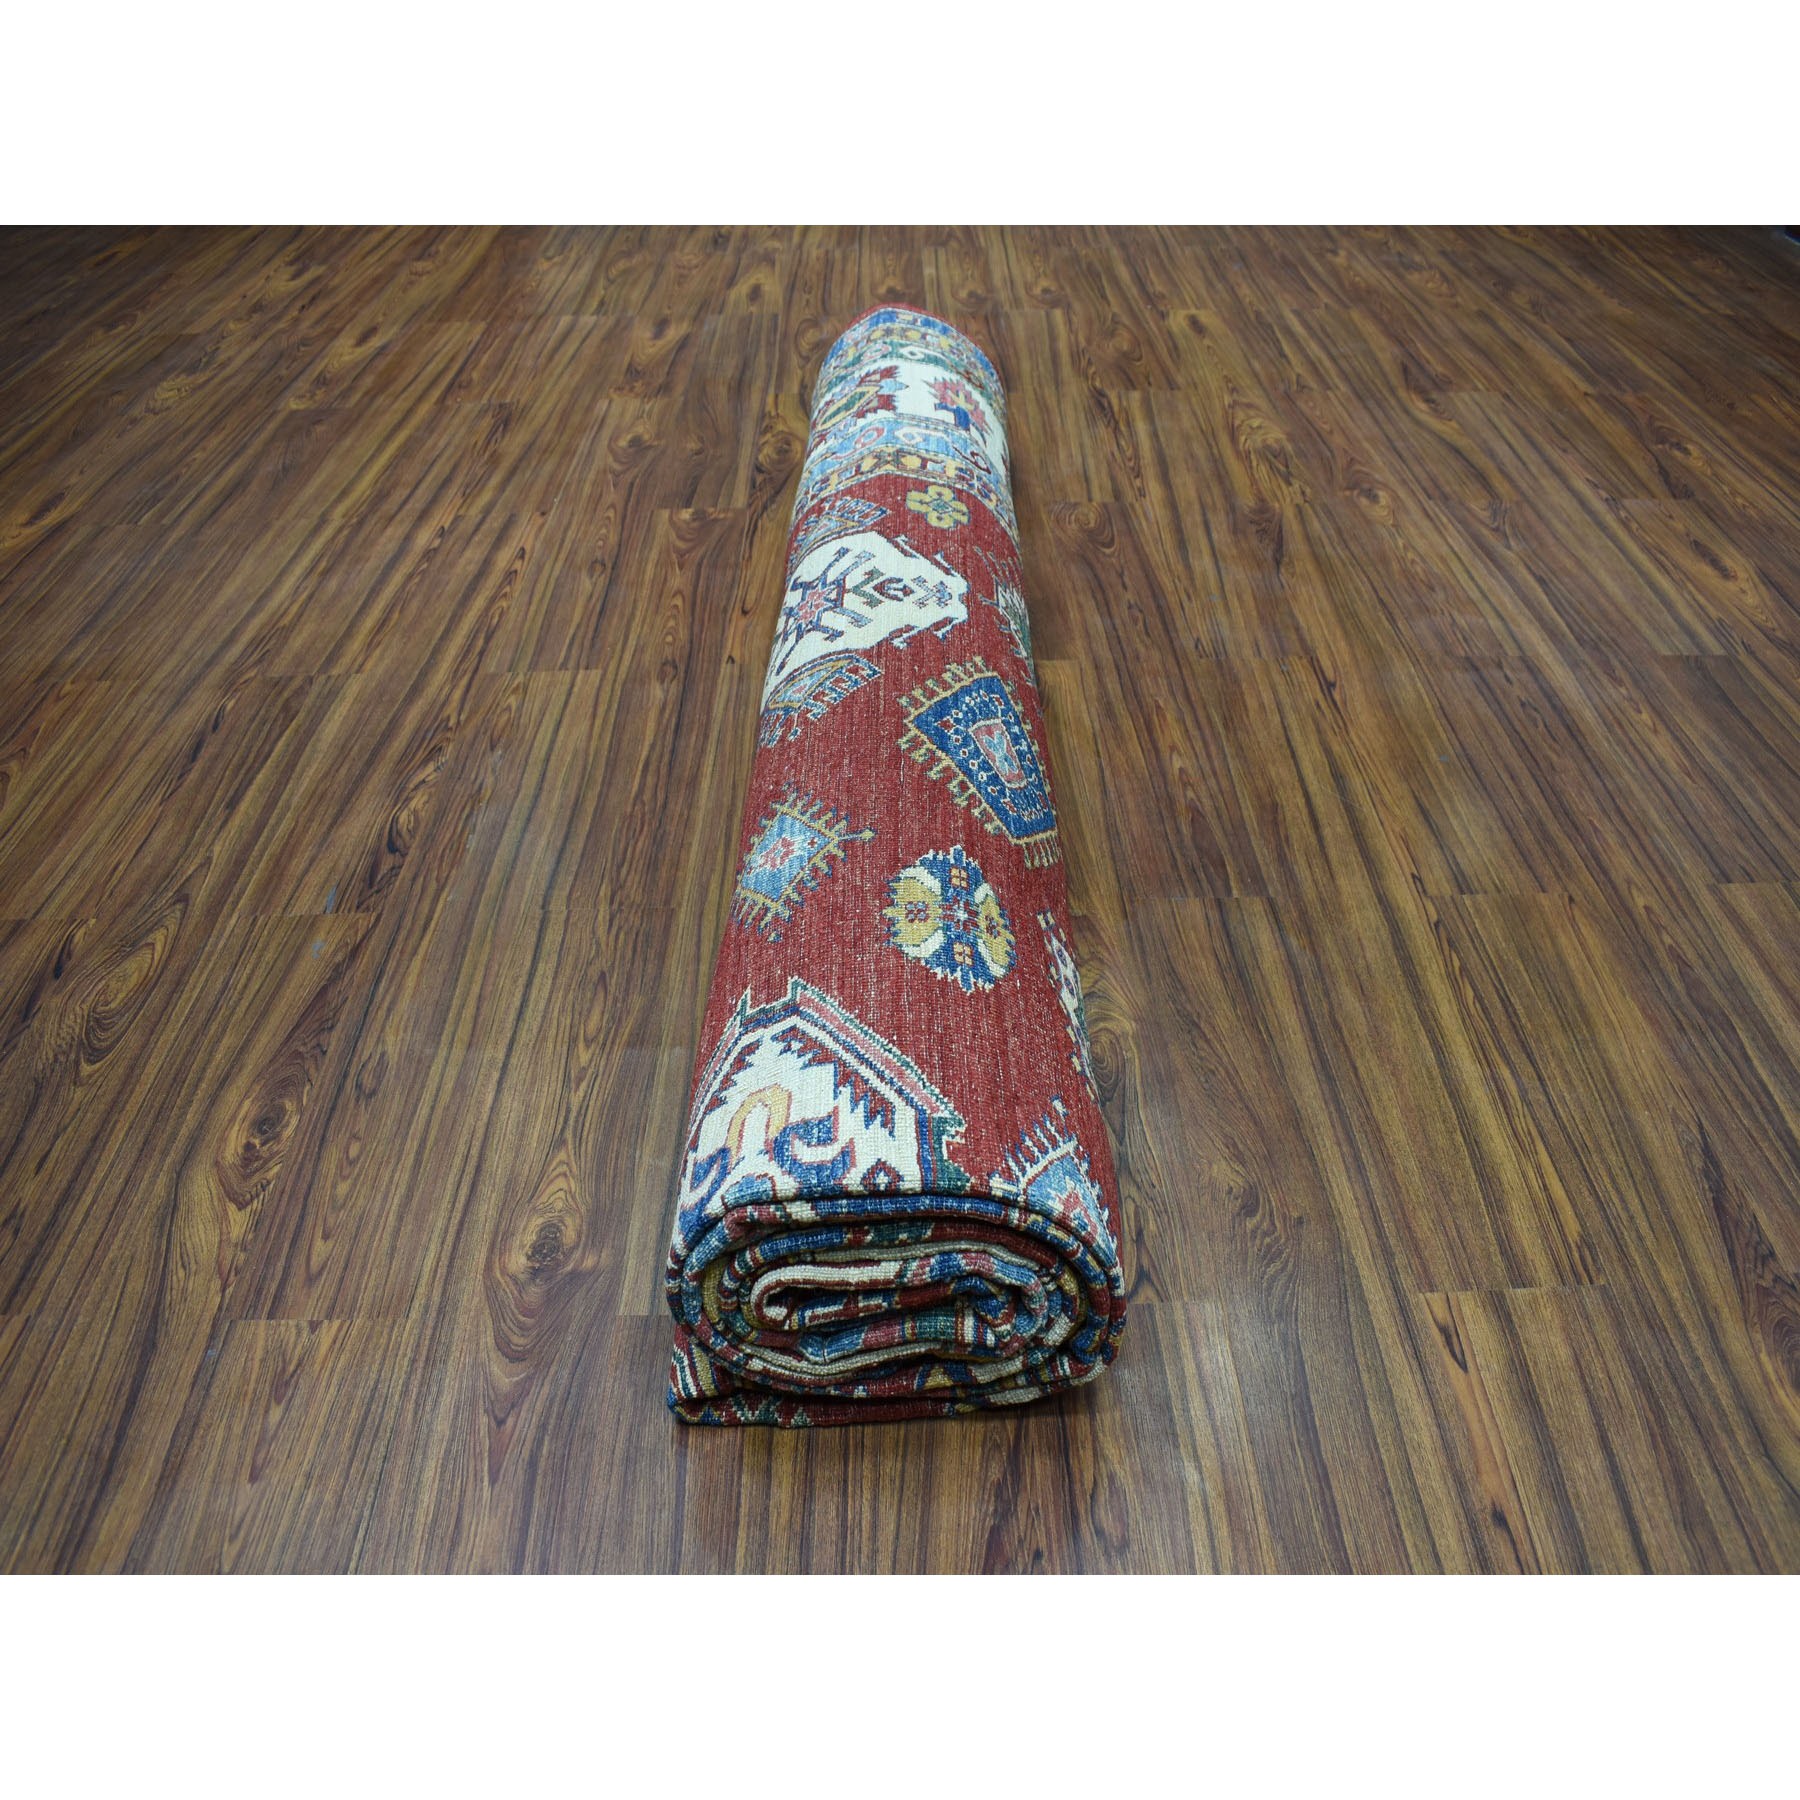 10-9 x14- Red Super Kazak Pure Wool Geometric Design Hand-Knotted Oriental Rug 